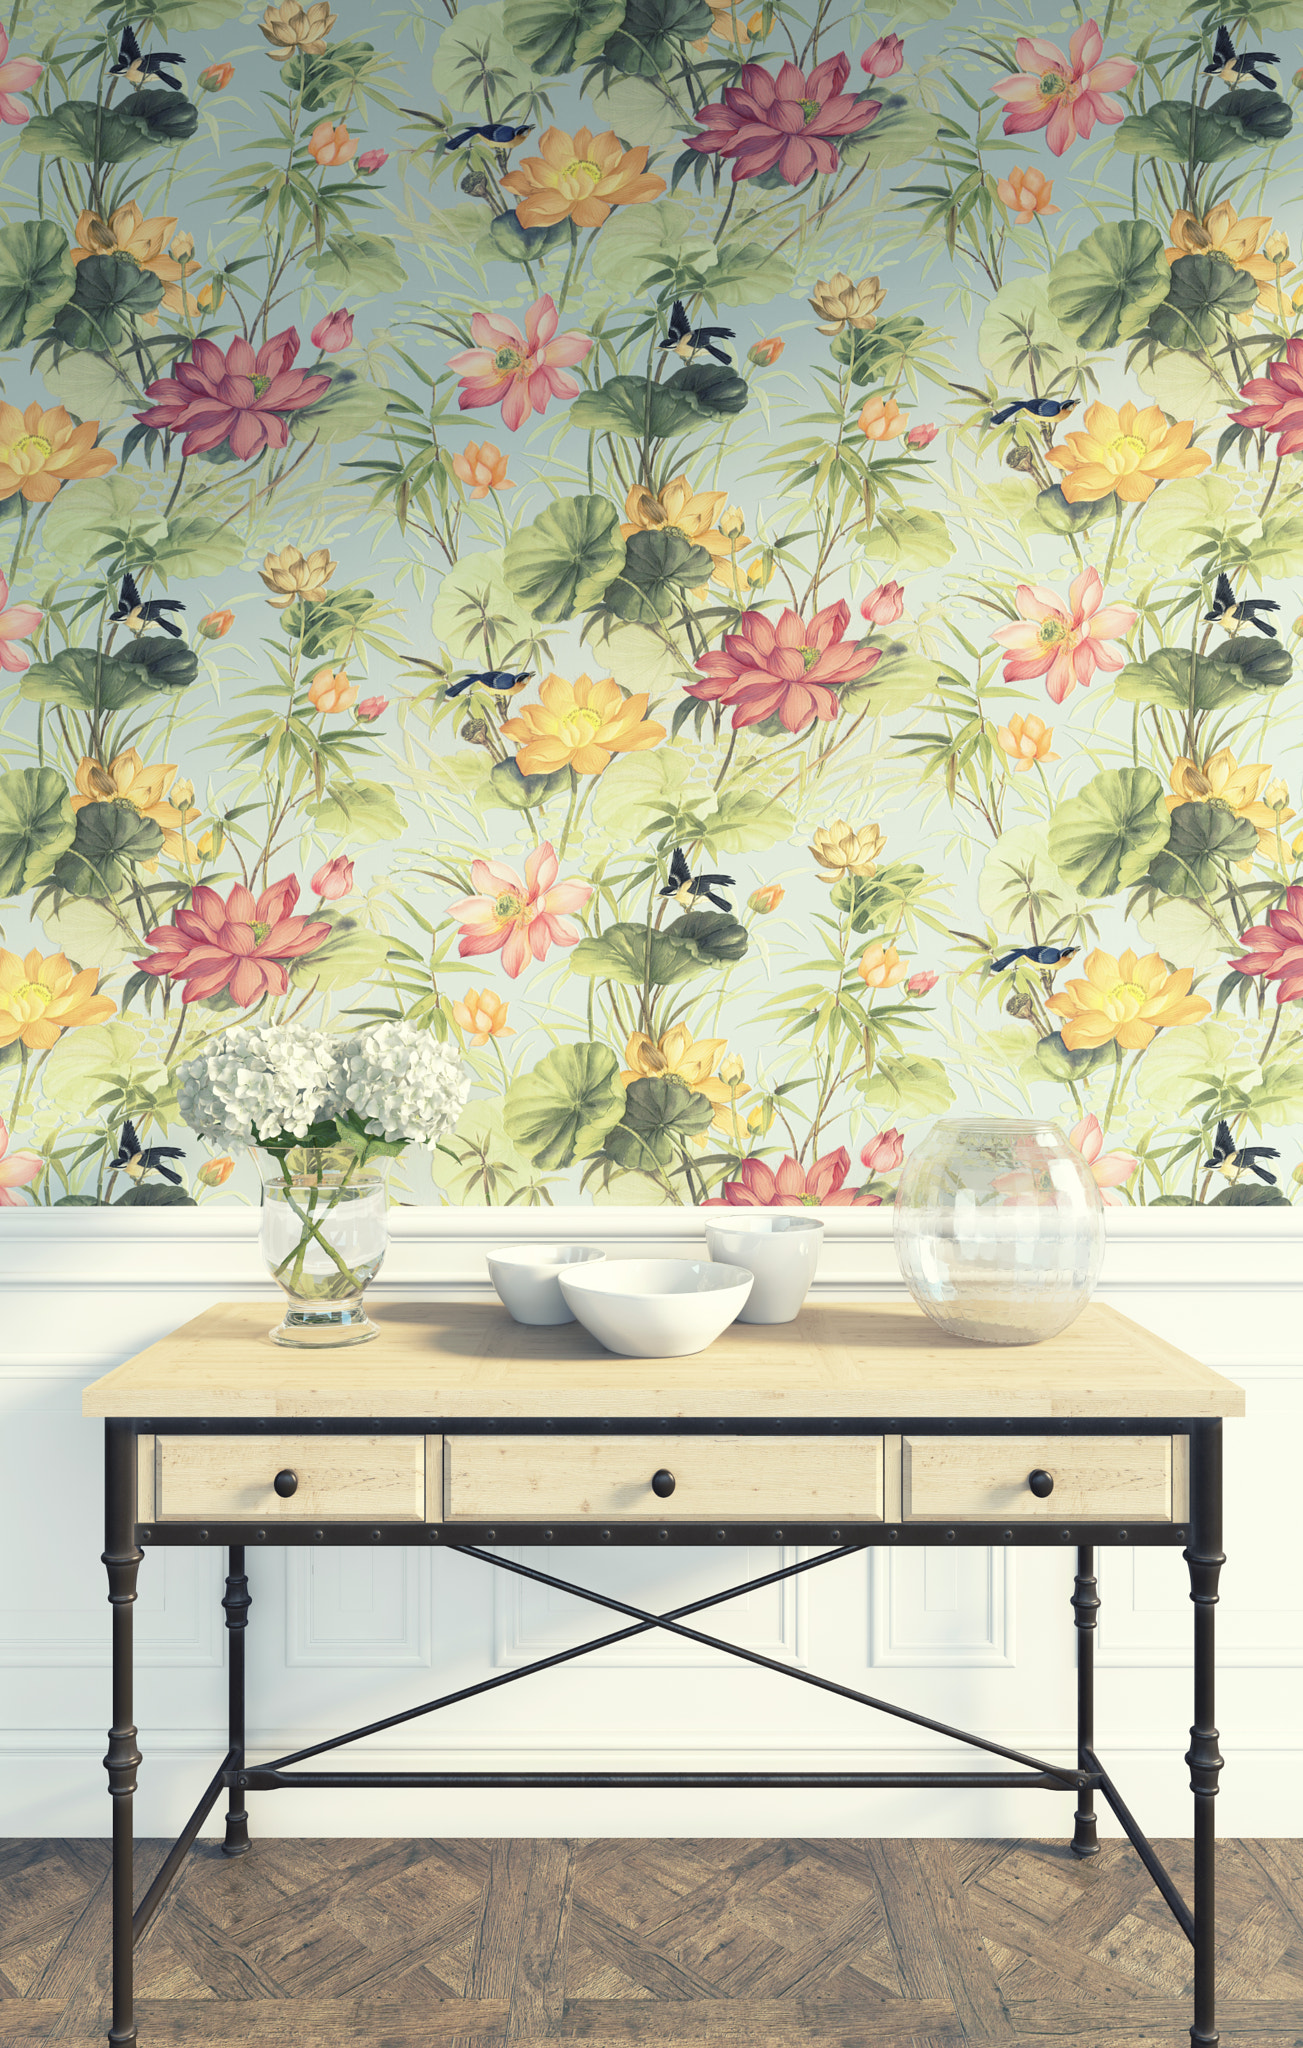 flowers wallpaper